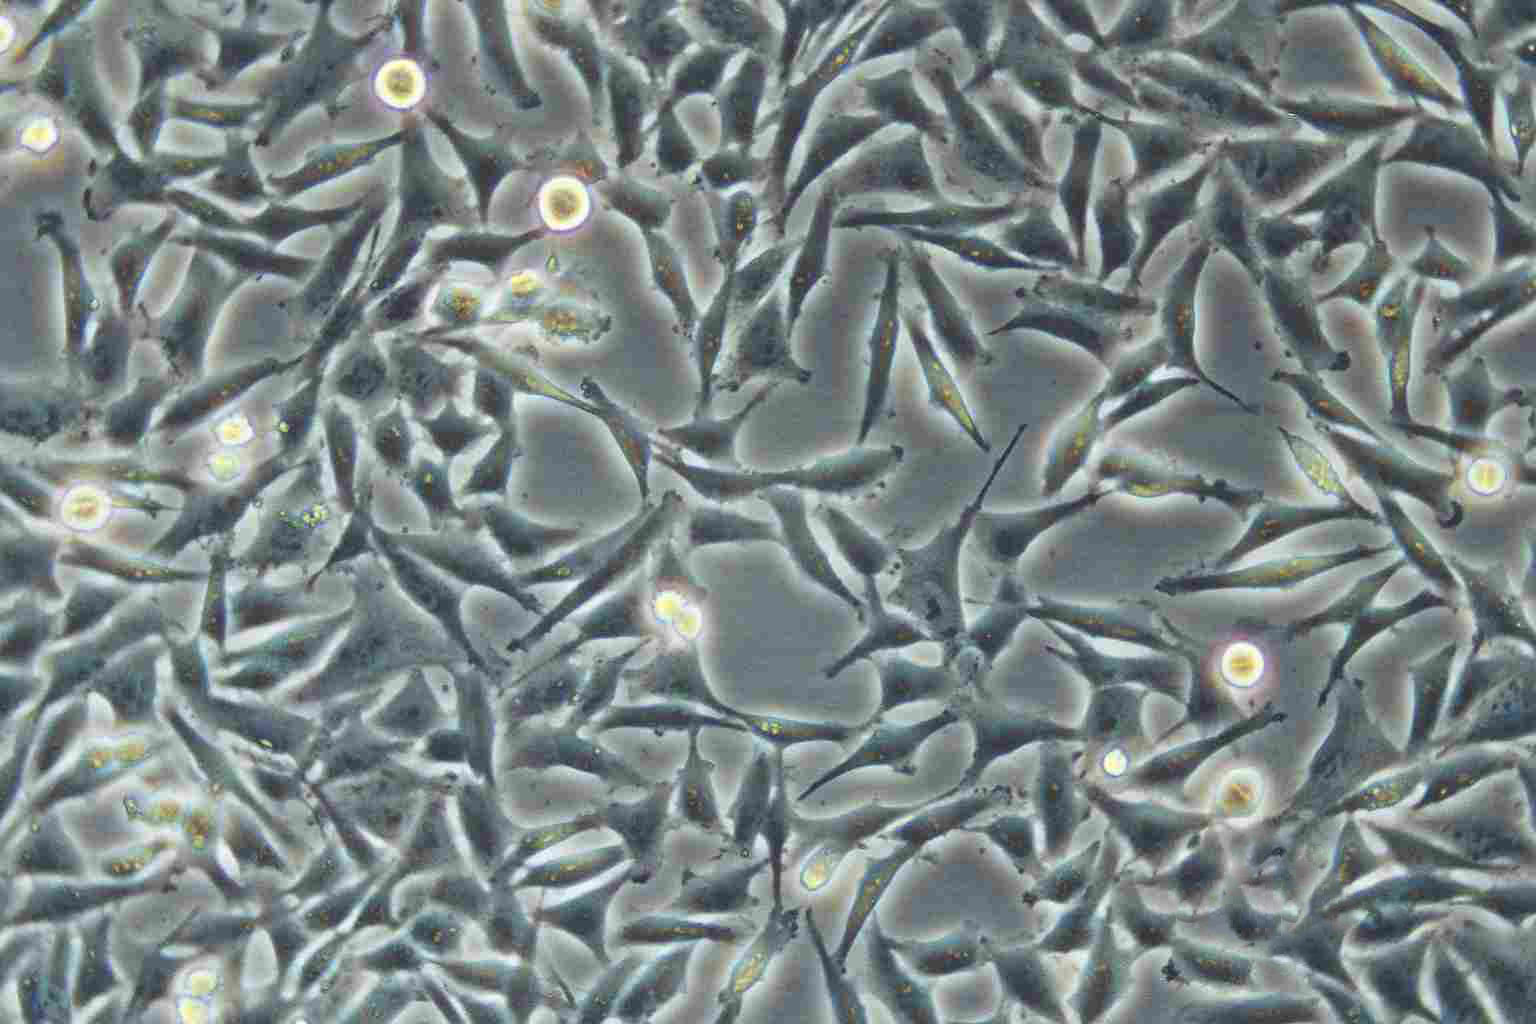 SNU-638 epithelioid cells人胃癌细胞系,SNU-638 epithelioid cells